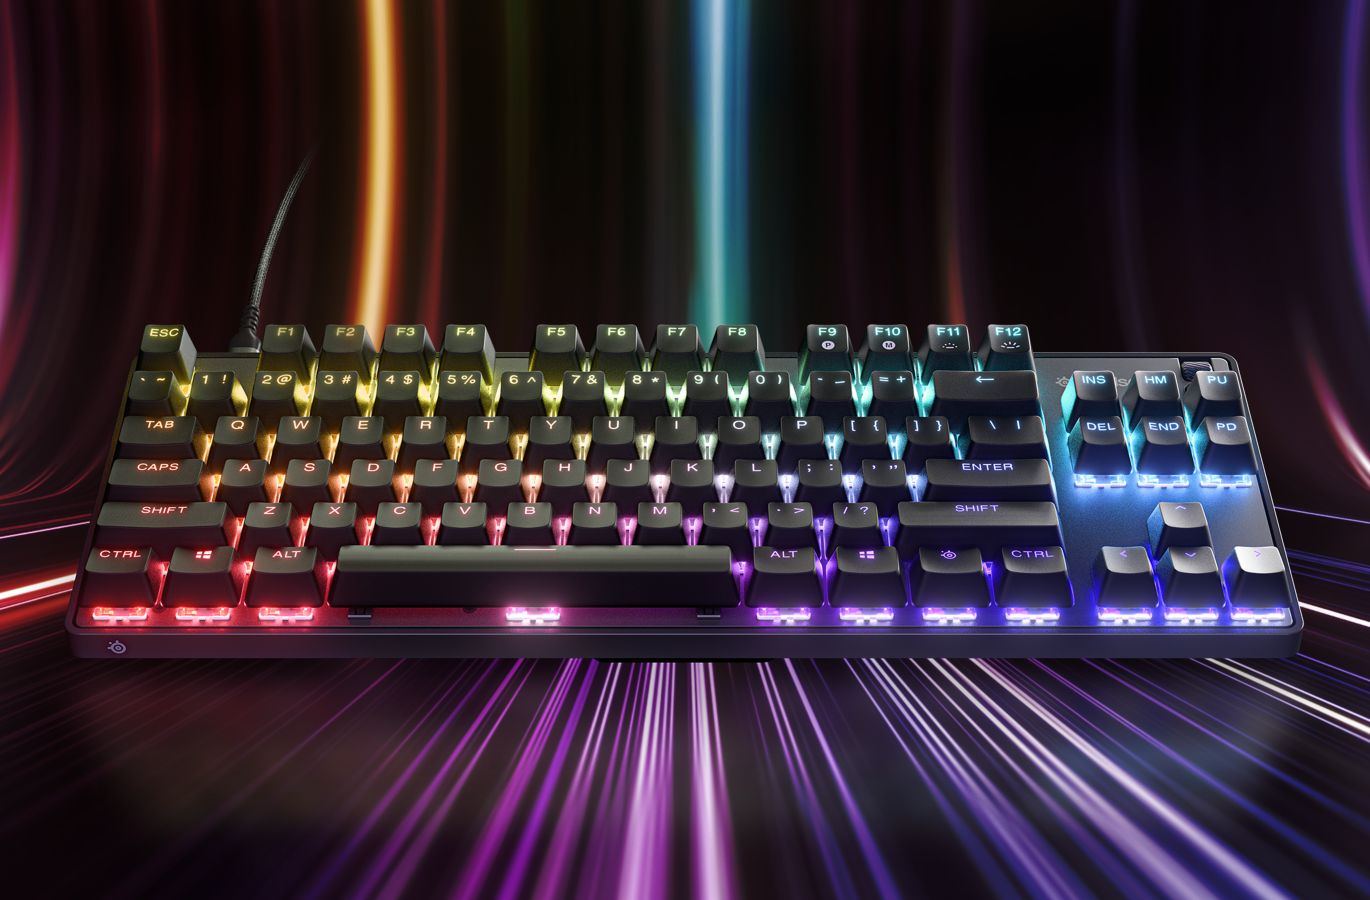 SteelSeries Apex Pro TKL (2023) review: blazing fast gaming keyboard